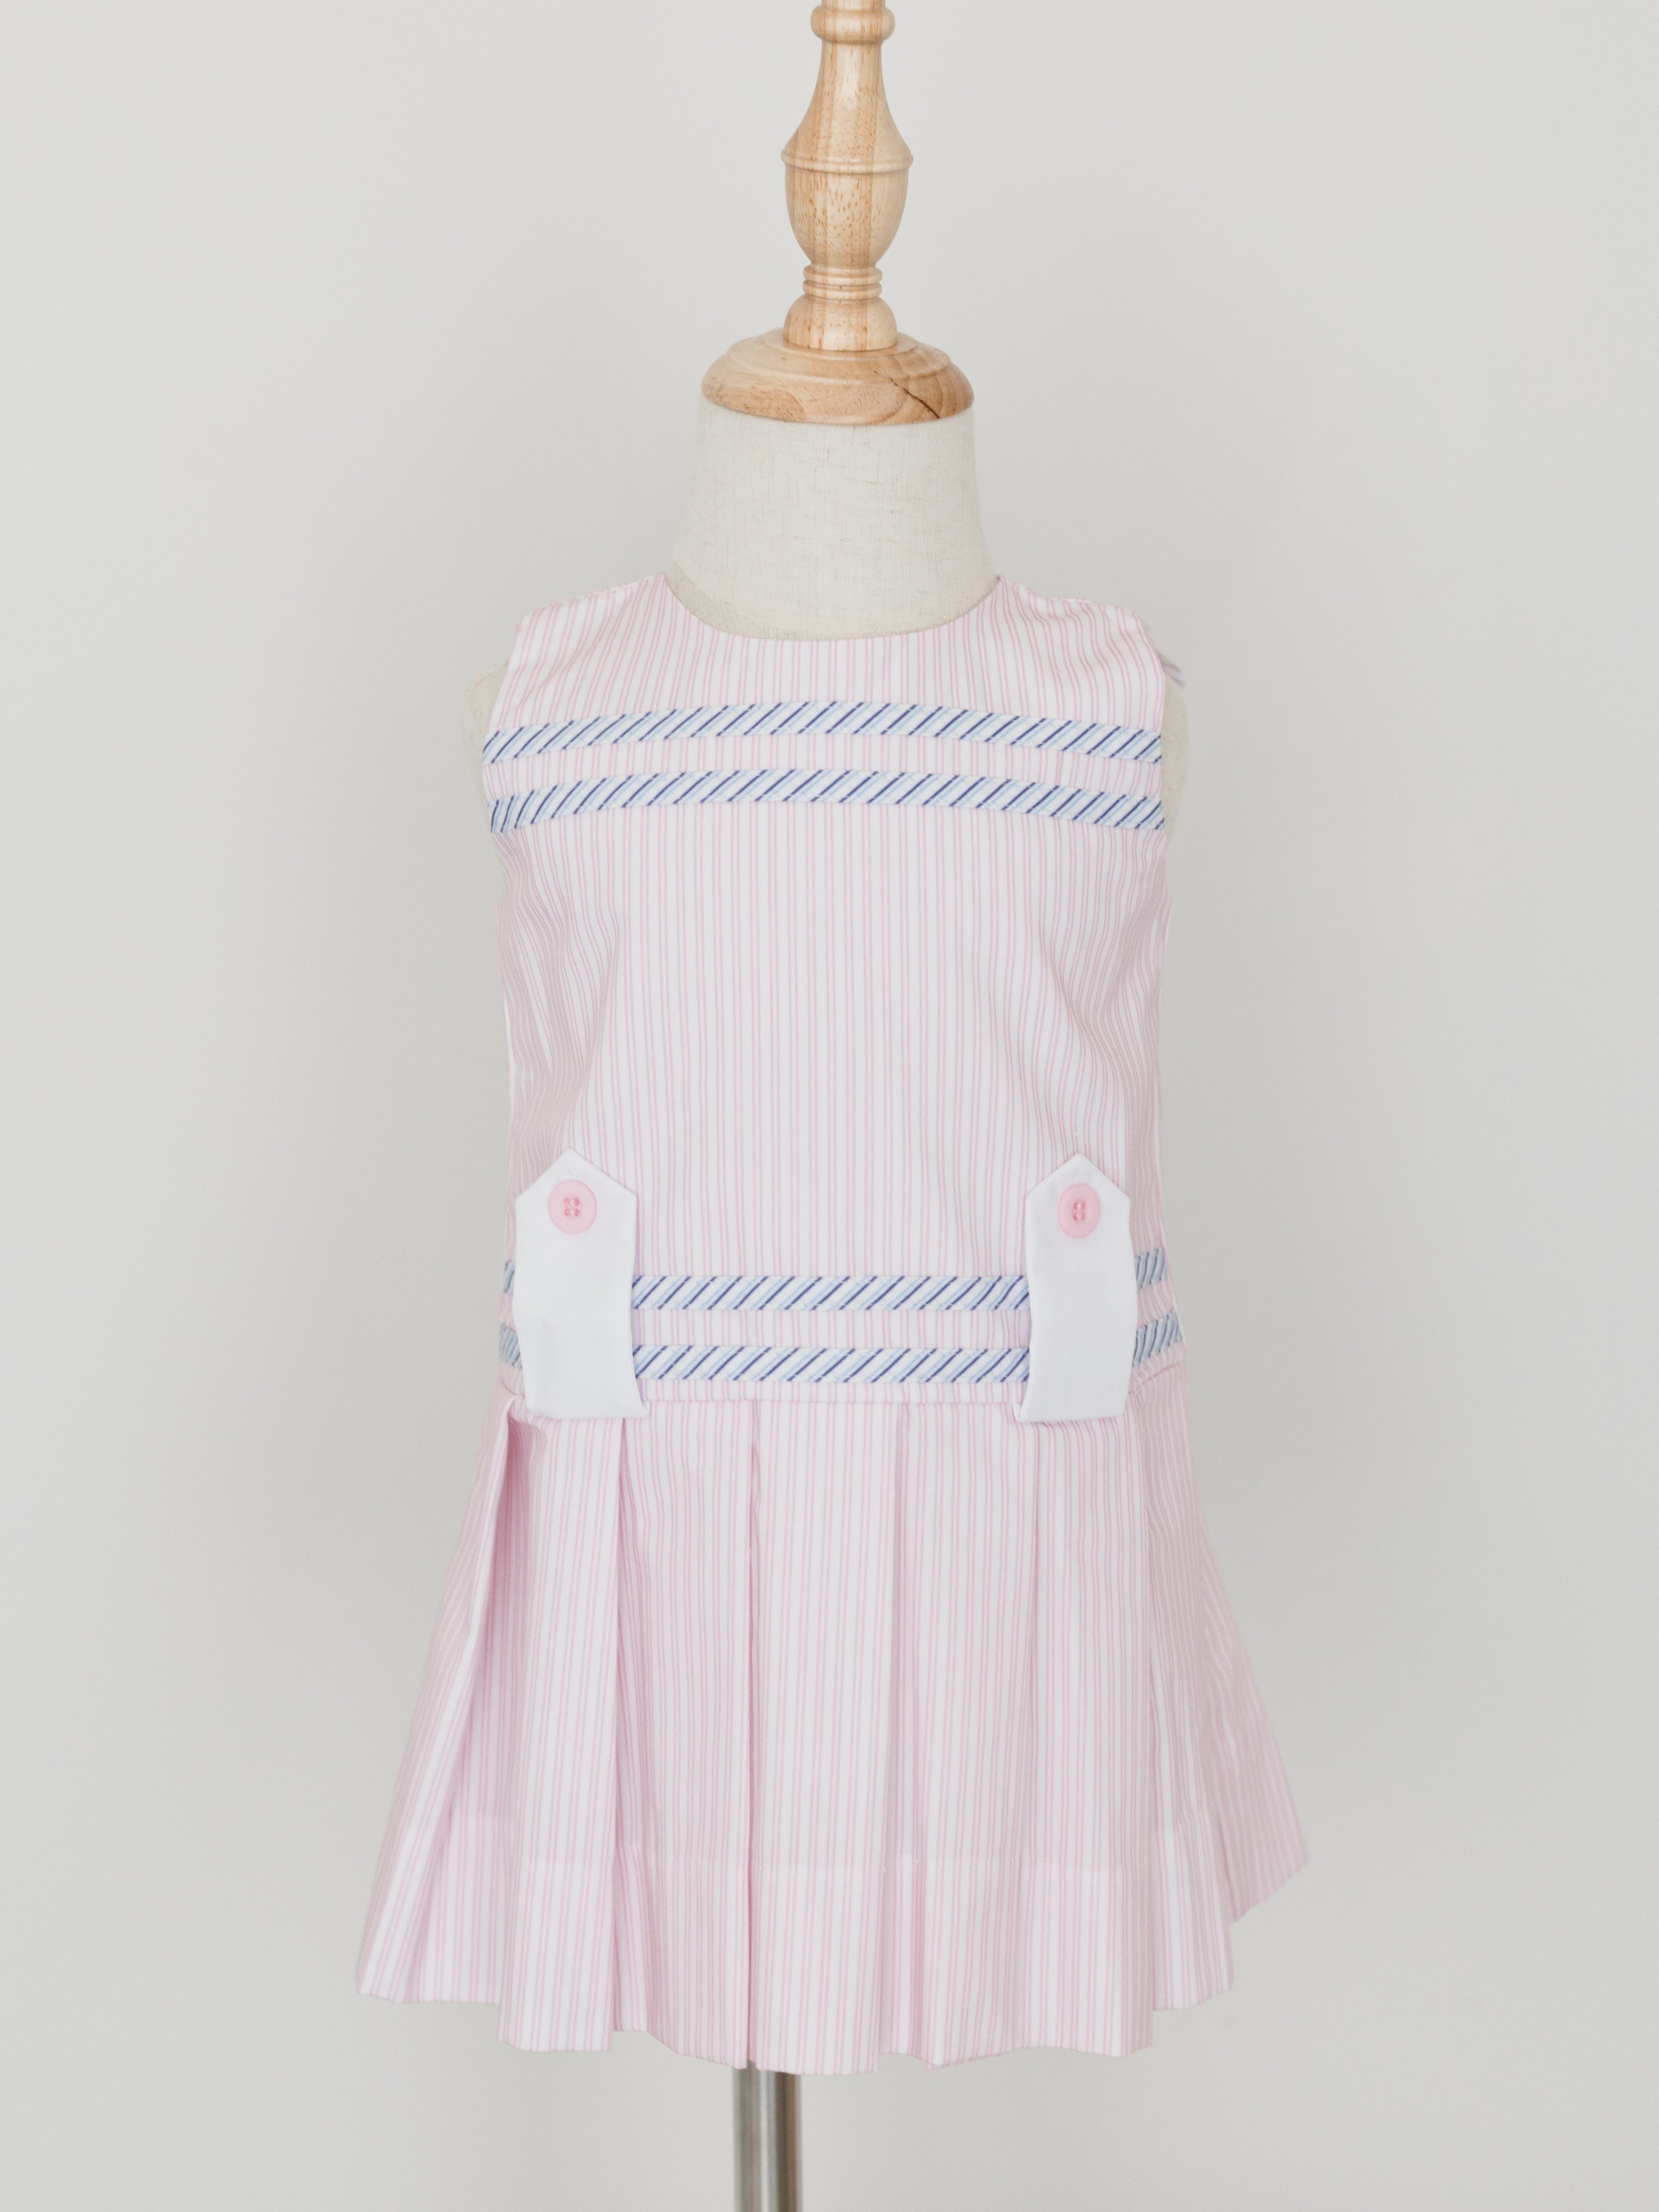 Lullaby Set Magnolia Dress - Pink / Blue Pinstripe